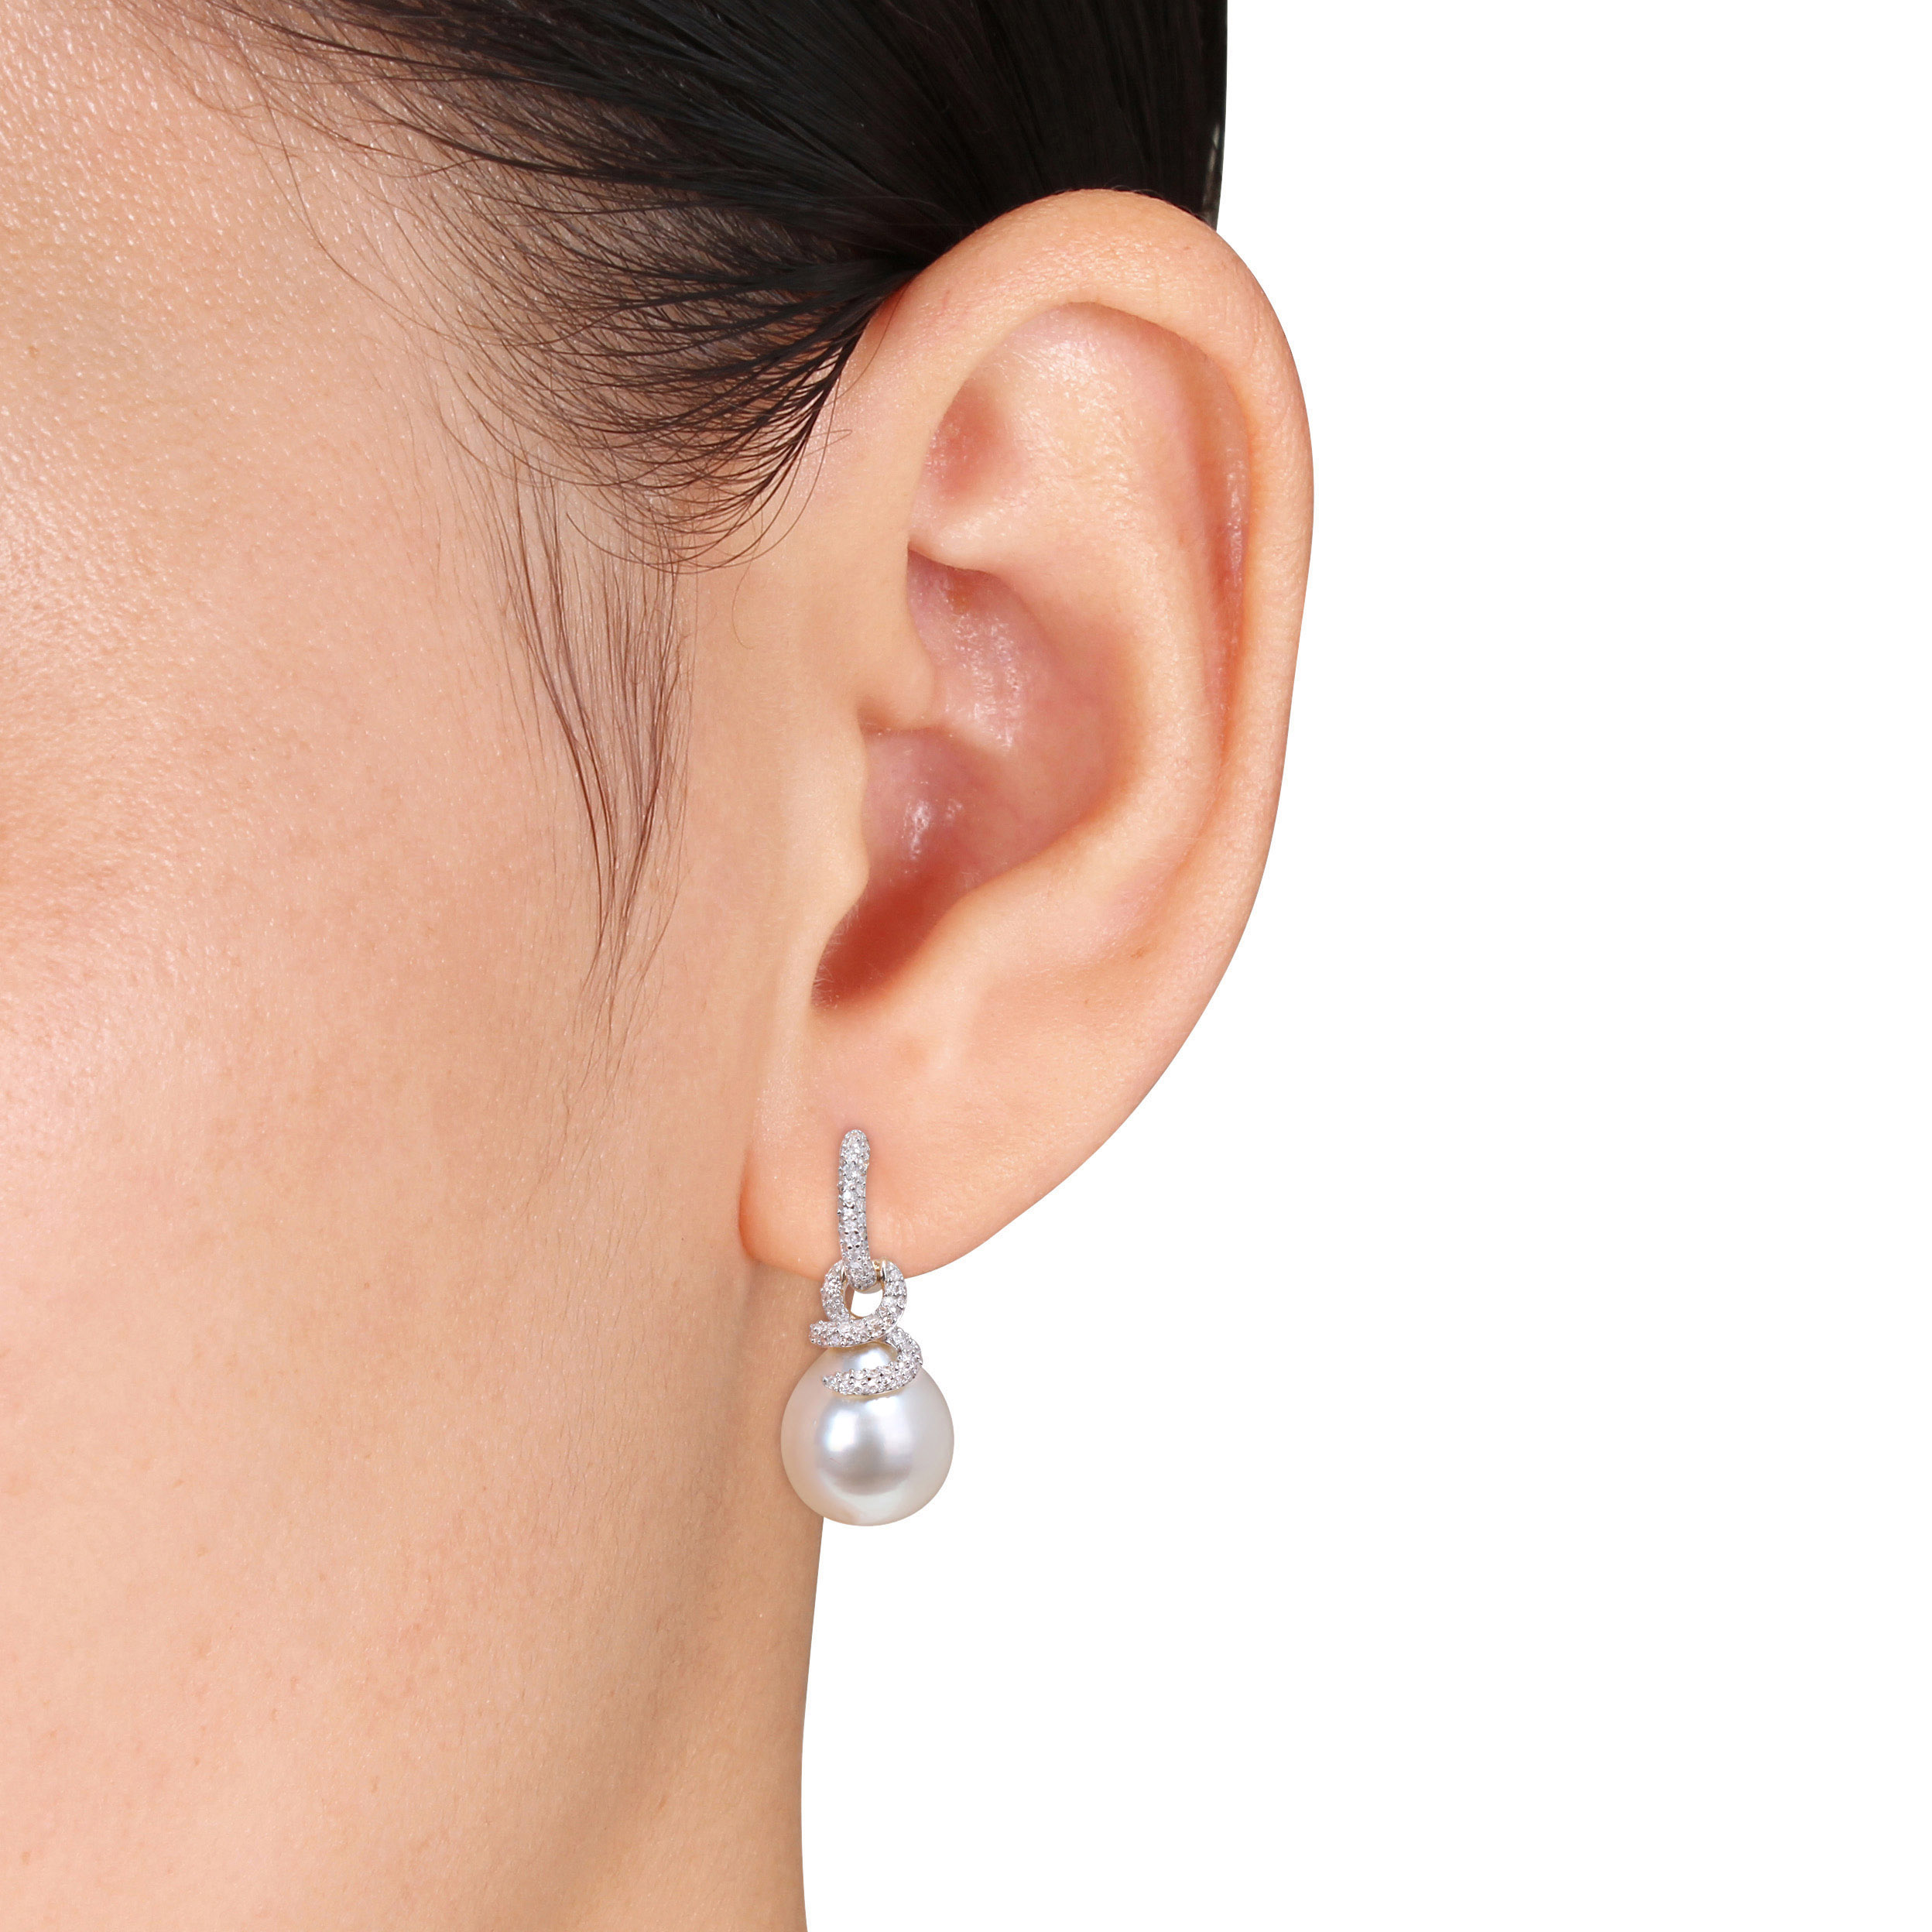 10-11 MM South Sea Cultured Pearl and 1/2 CT TW Diamond Swirl Huggie Earrings in 14k Yellow Gold